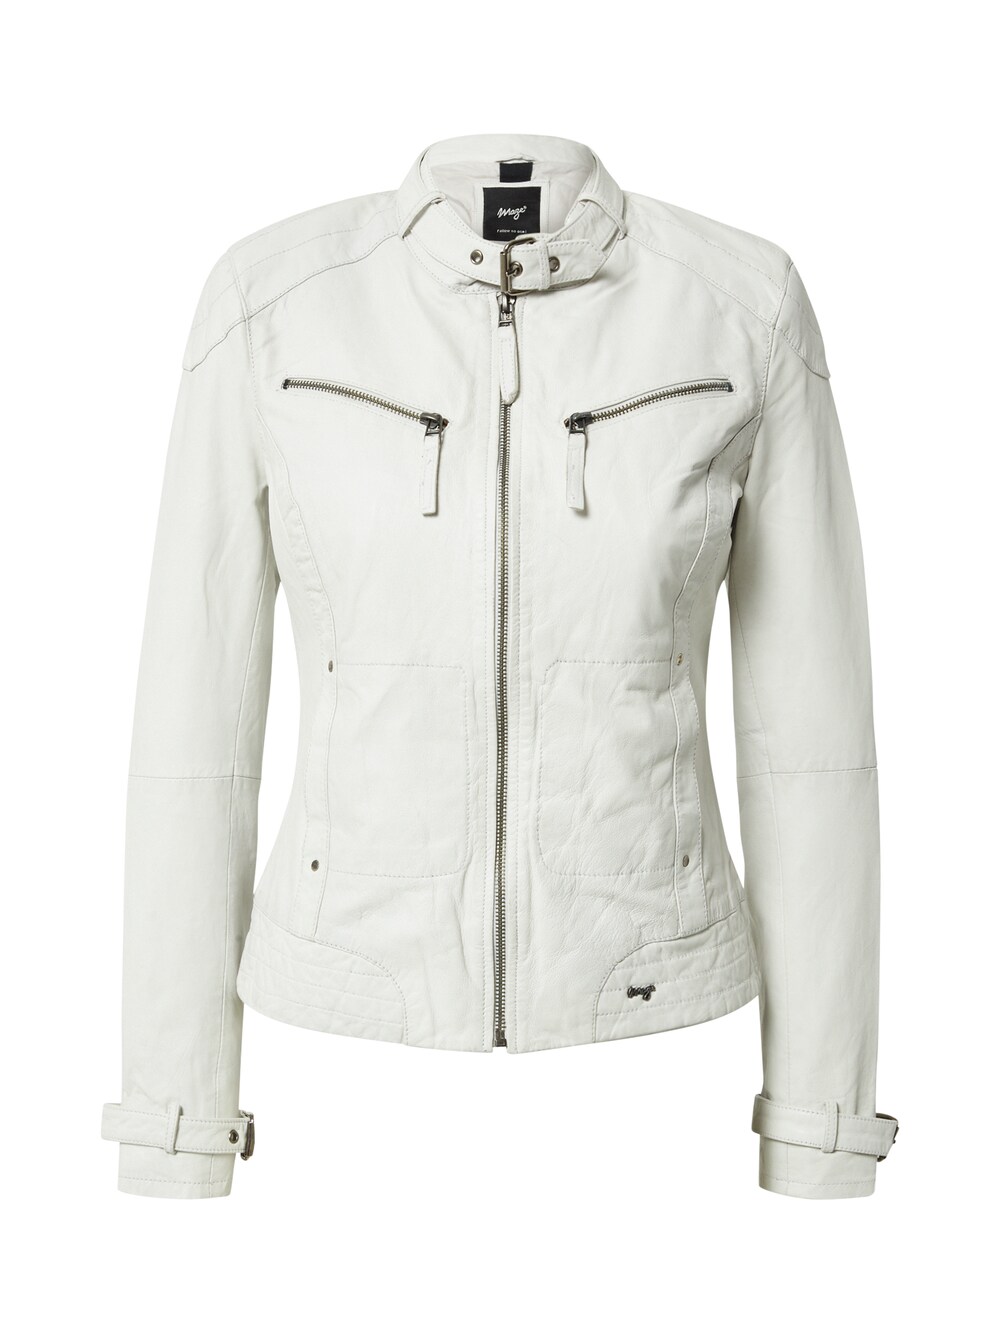 Межсезонная куртка Maze Ryana, белый межсезонная куртка mustang ryana коричневый